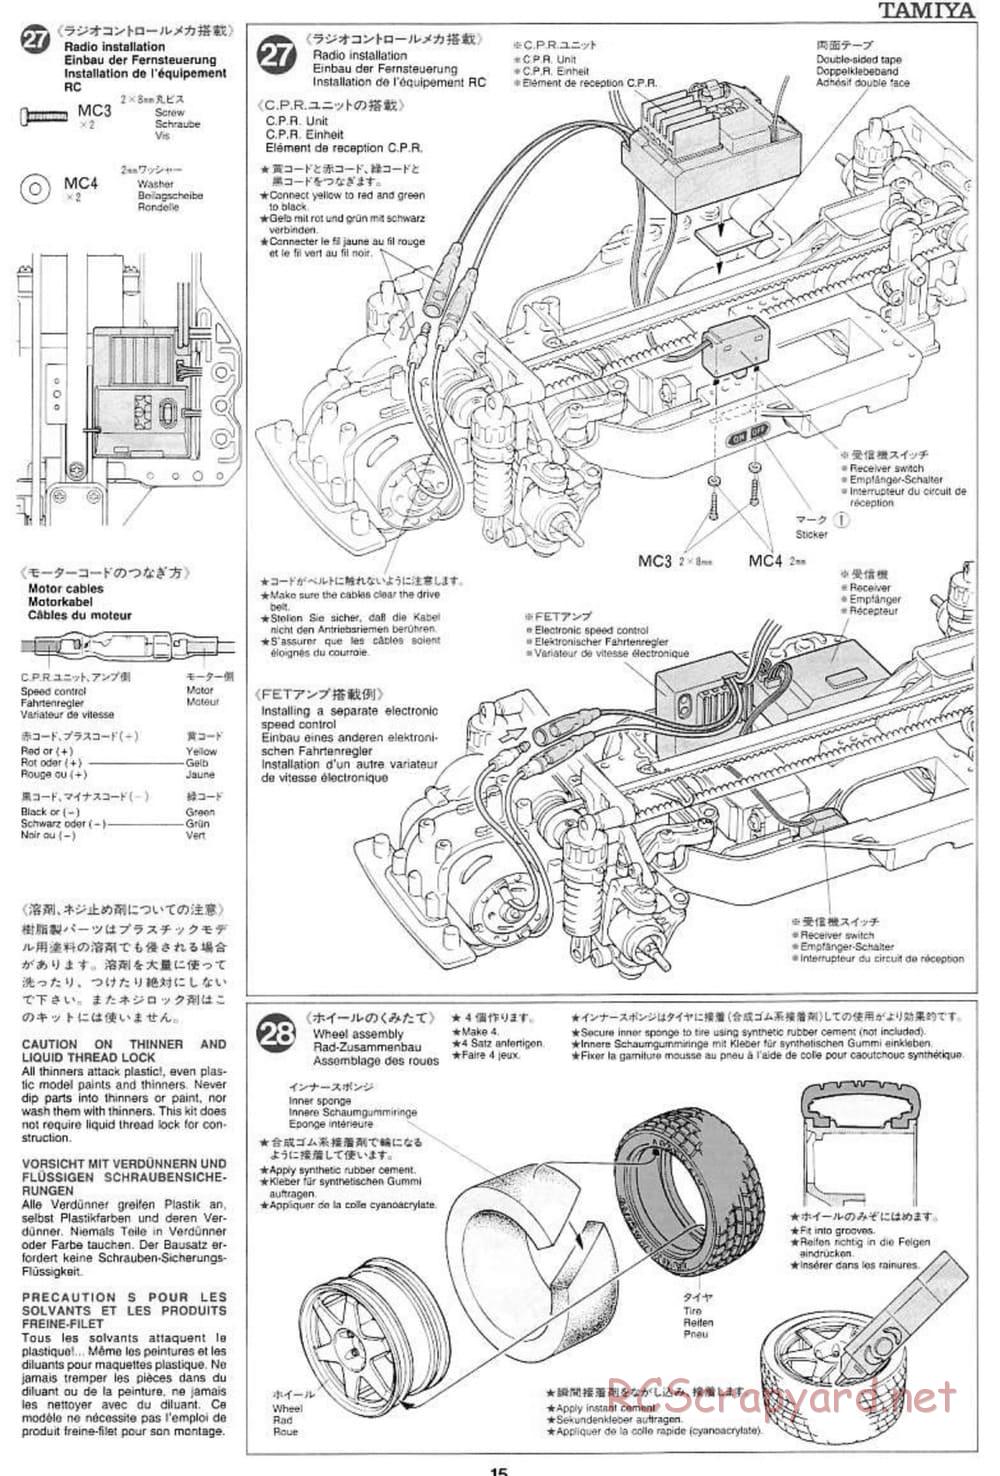 Tamiya - Toyota Corolla WRC - TA-03FS Chassis - Manual - Page 15